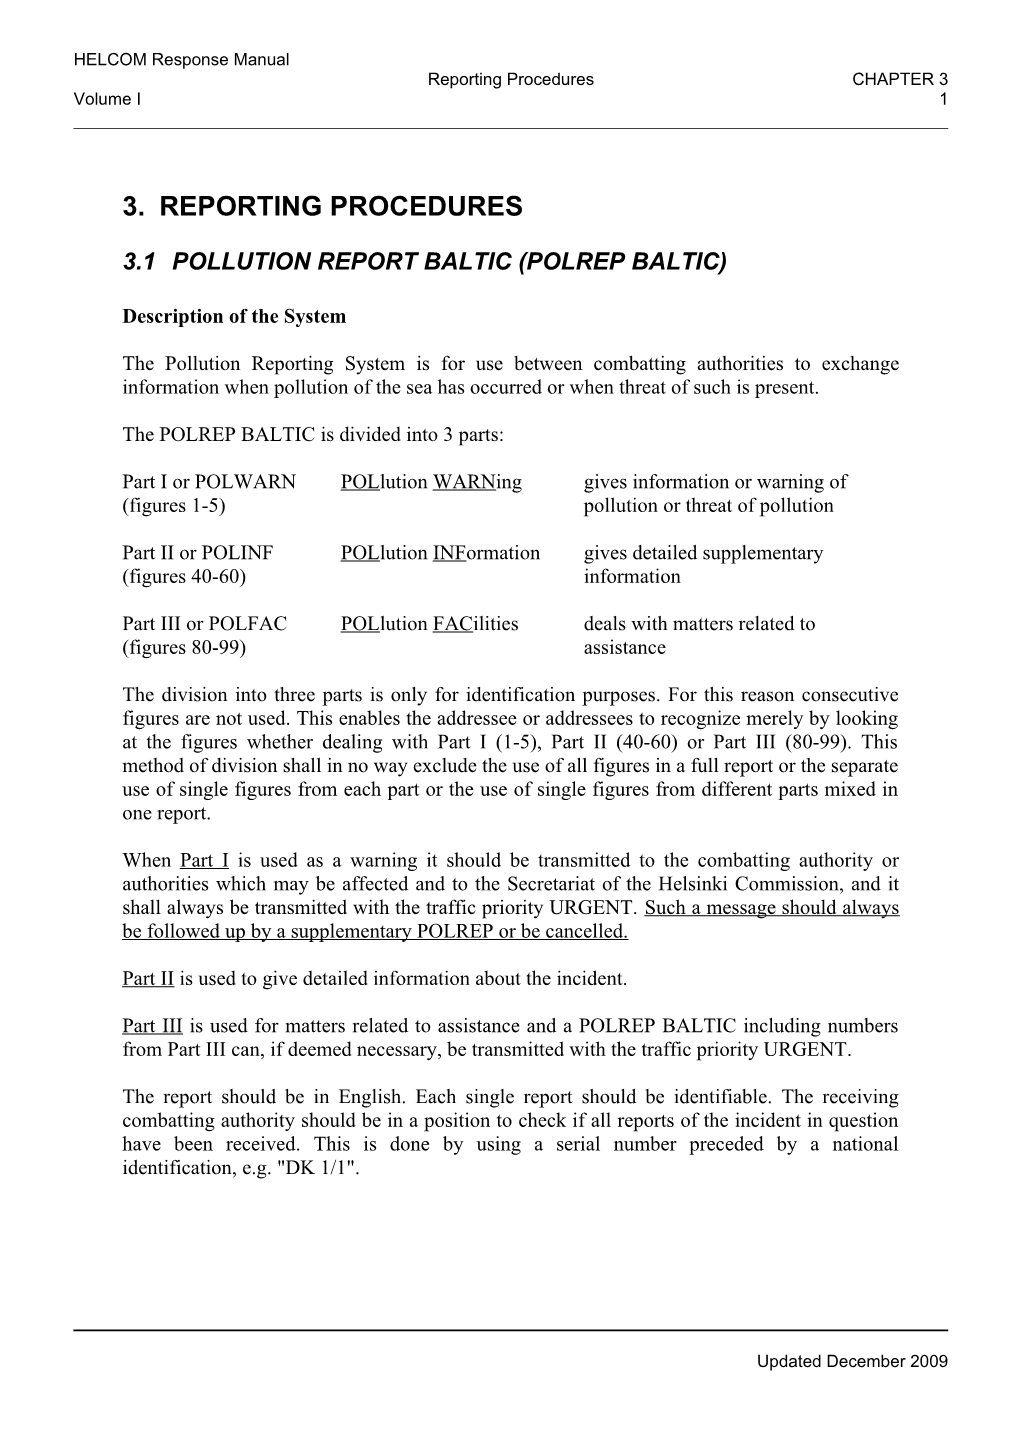 3.1Pollution Report Baltic (Polrep Baltic)